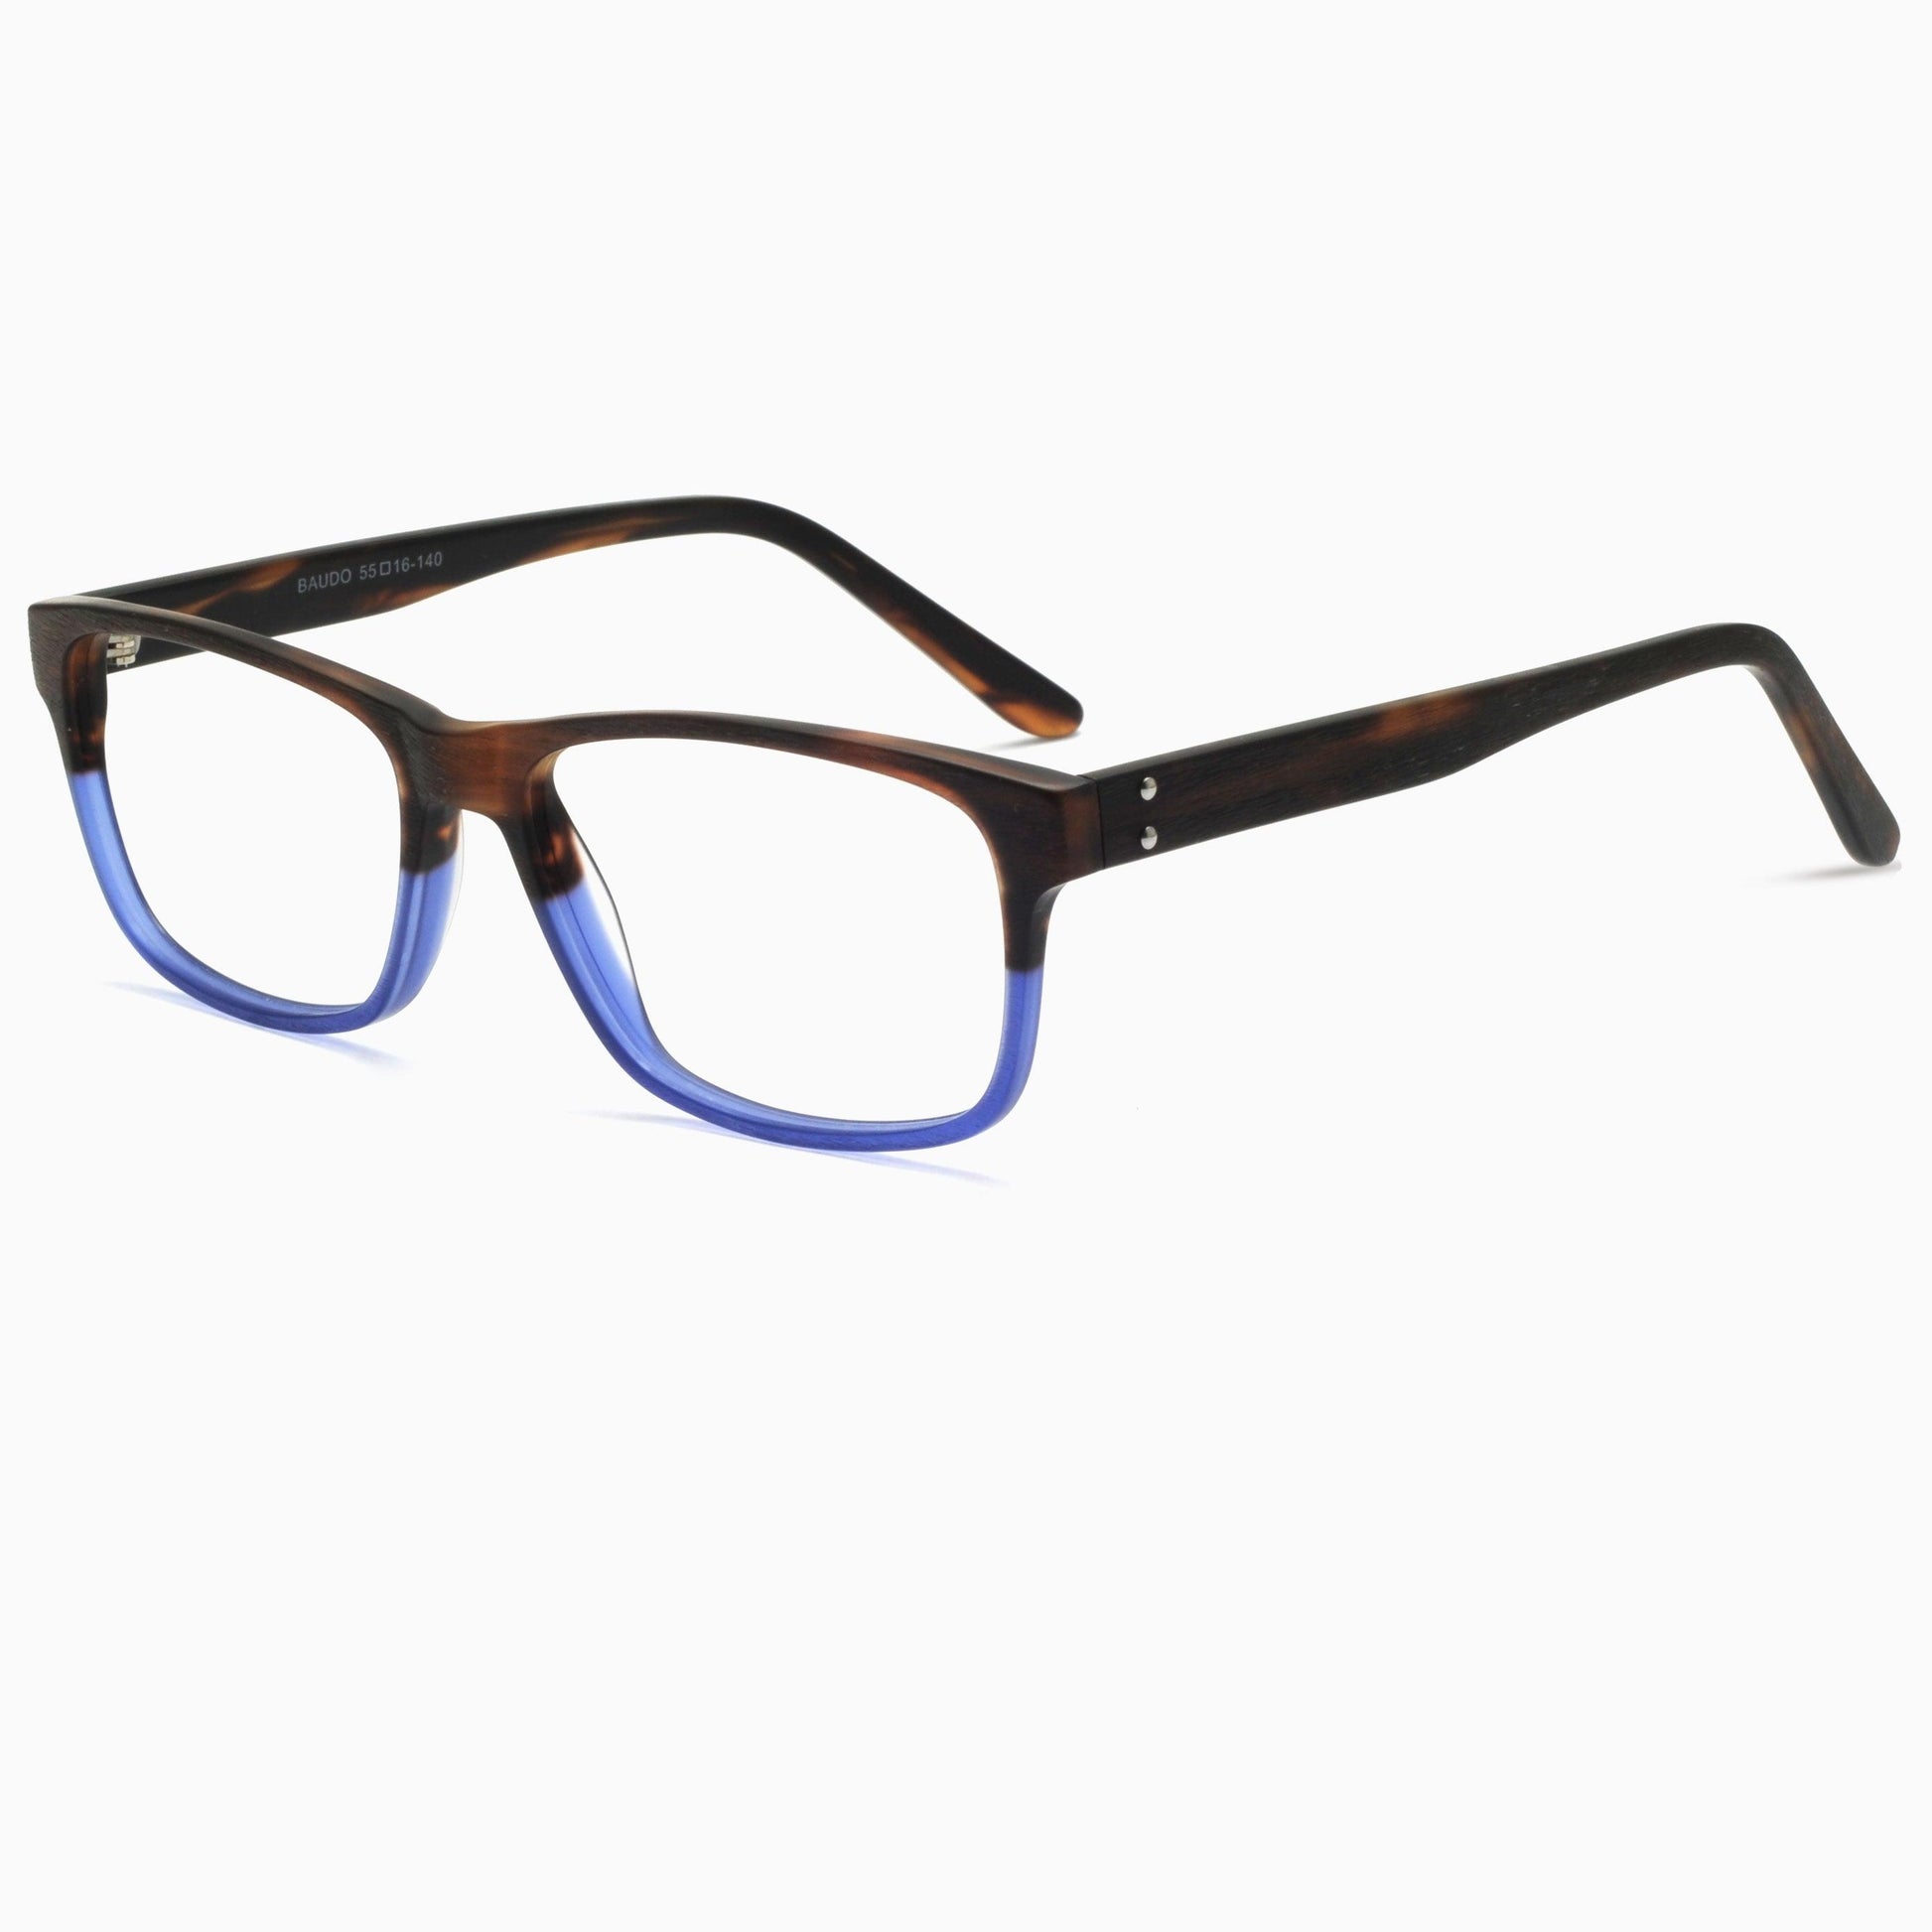 Men's Optical Frame Fashion Glasses Frame For Prescription BAUDO - Occichiari 